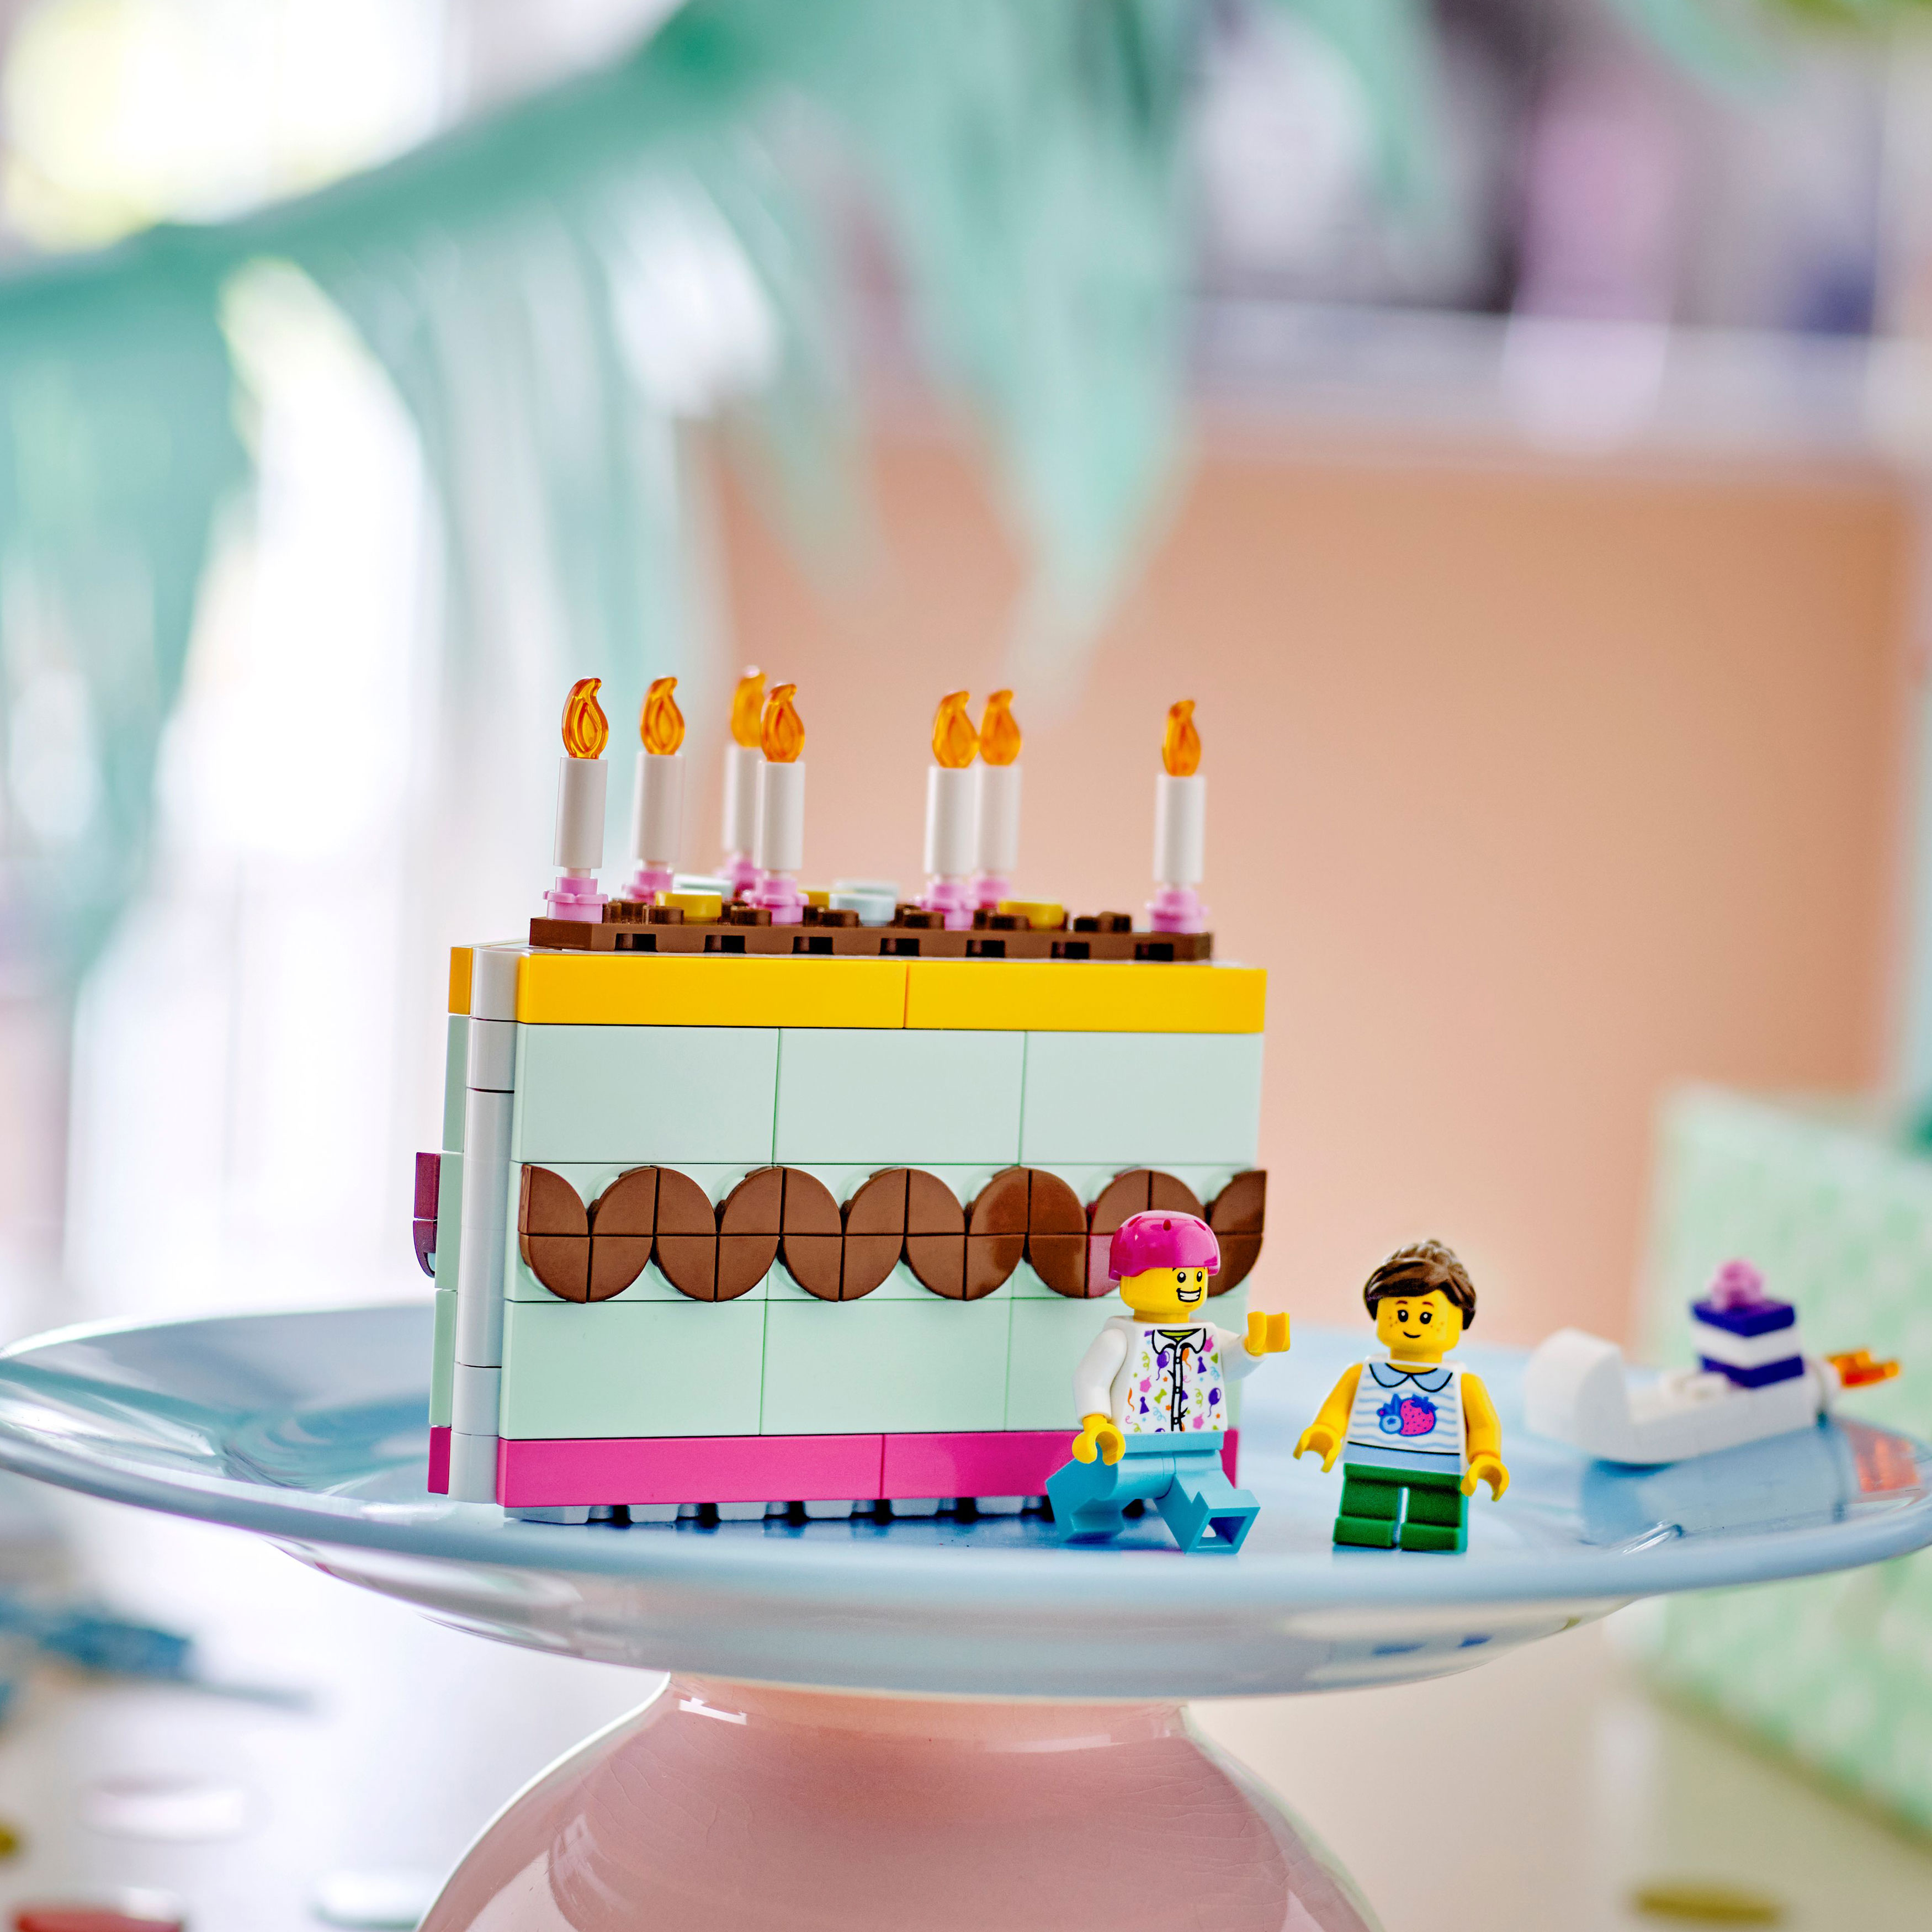 Lego Cake Topper - PimpYourWorld